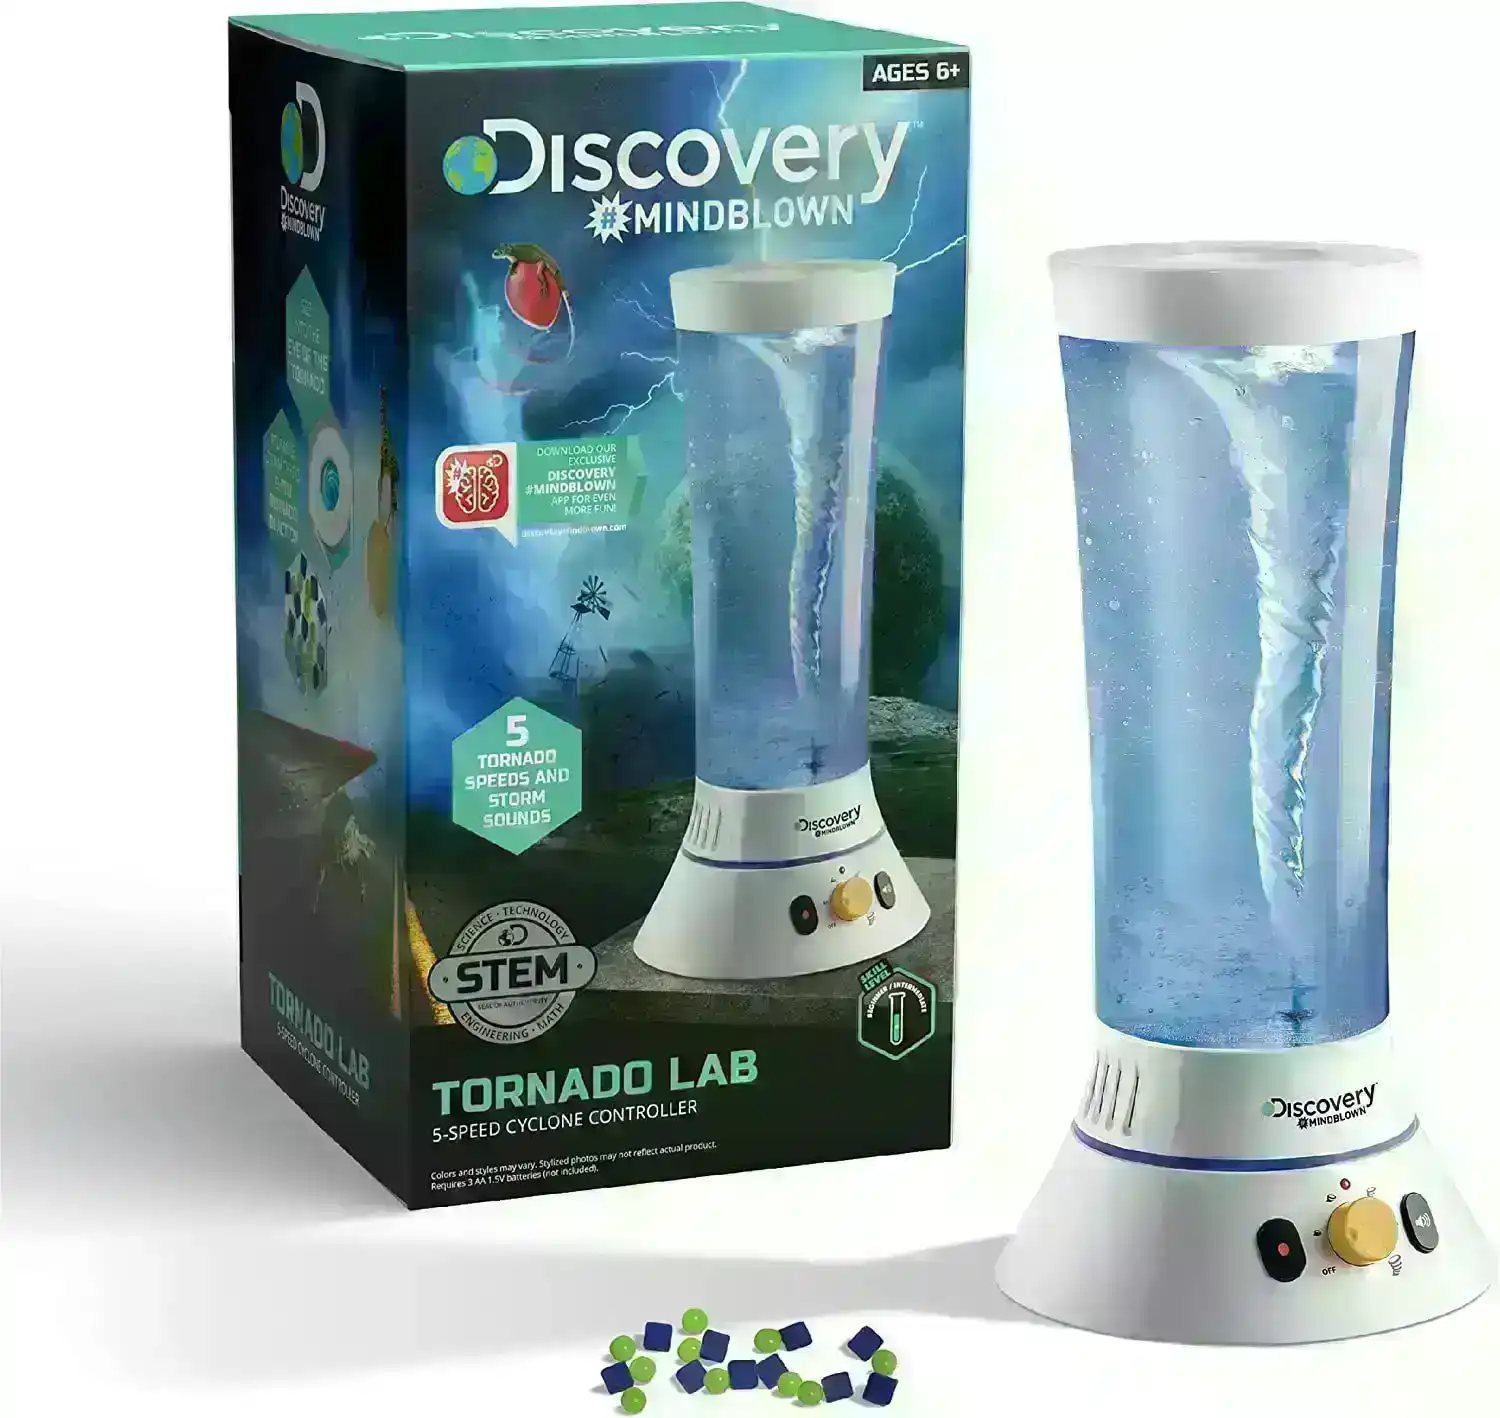 Discovery #Mindblown Tornado Lab